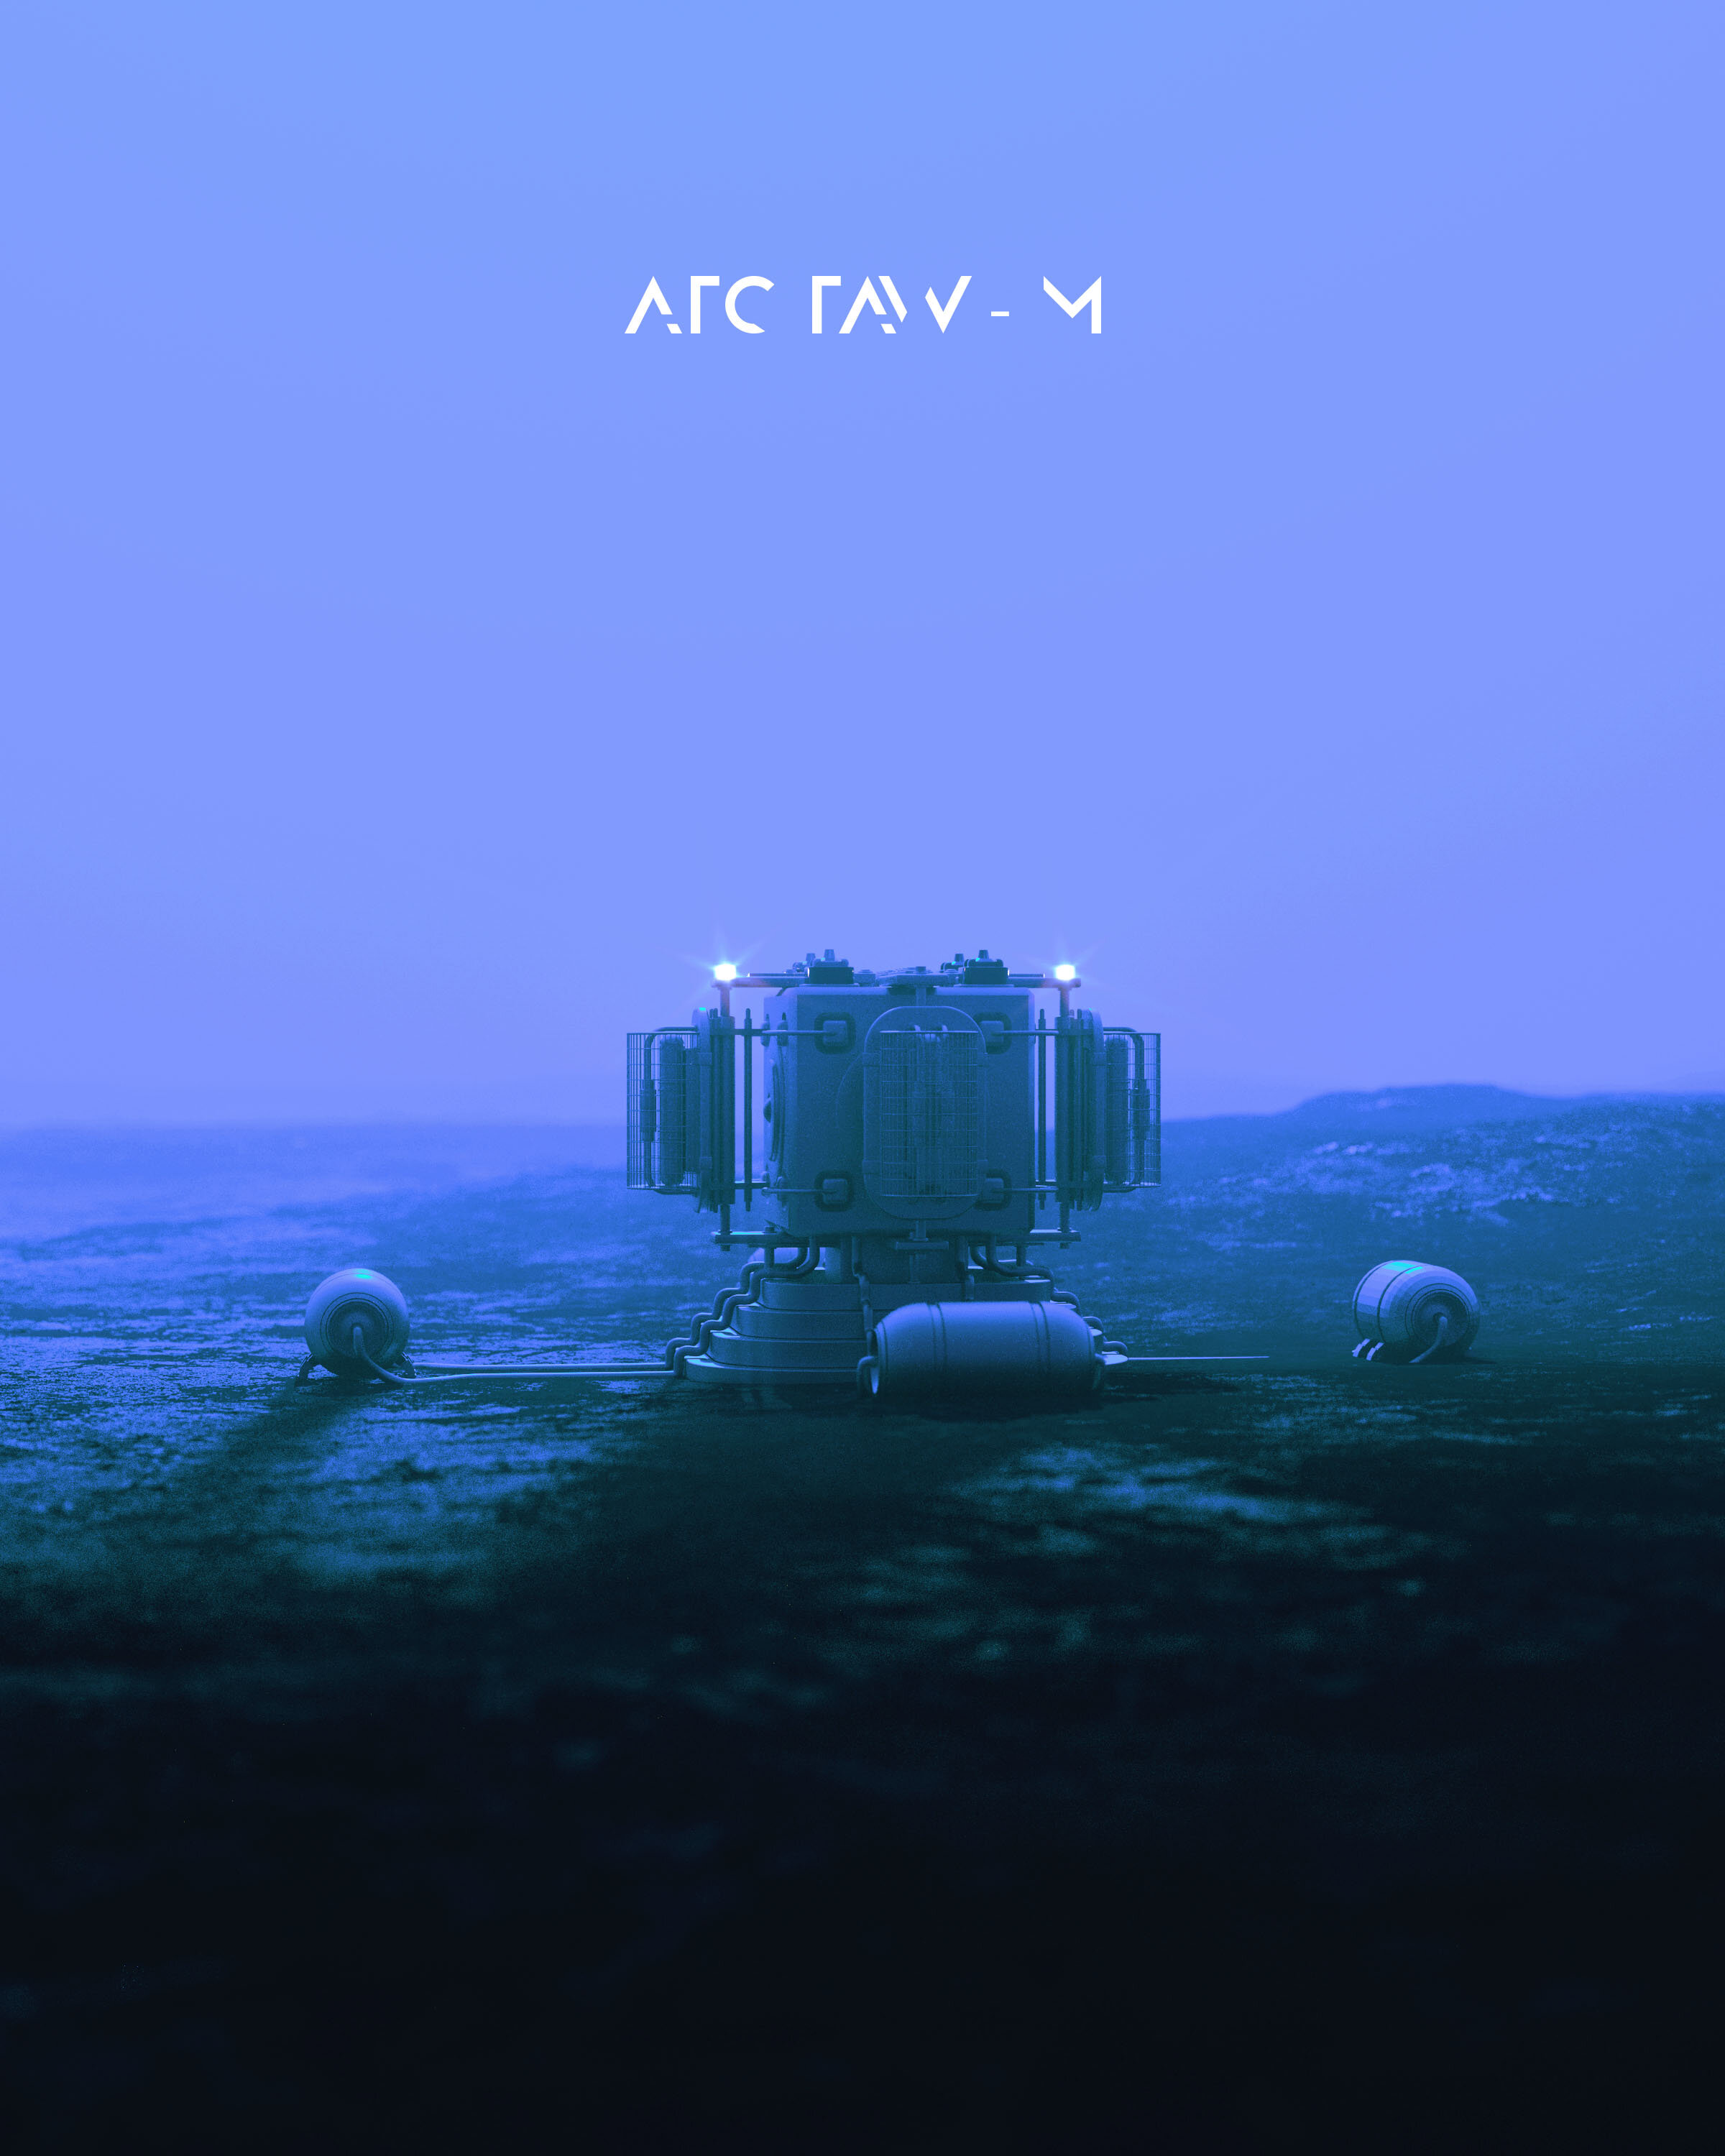 ATC TAW- M